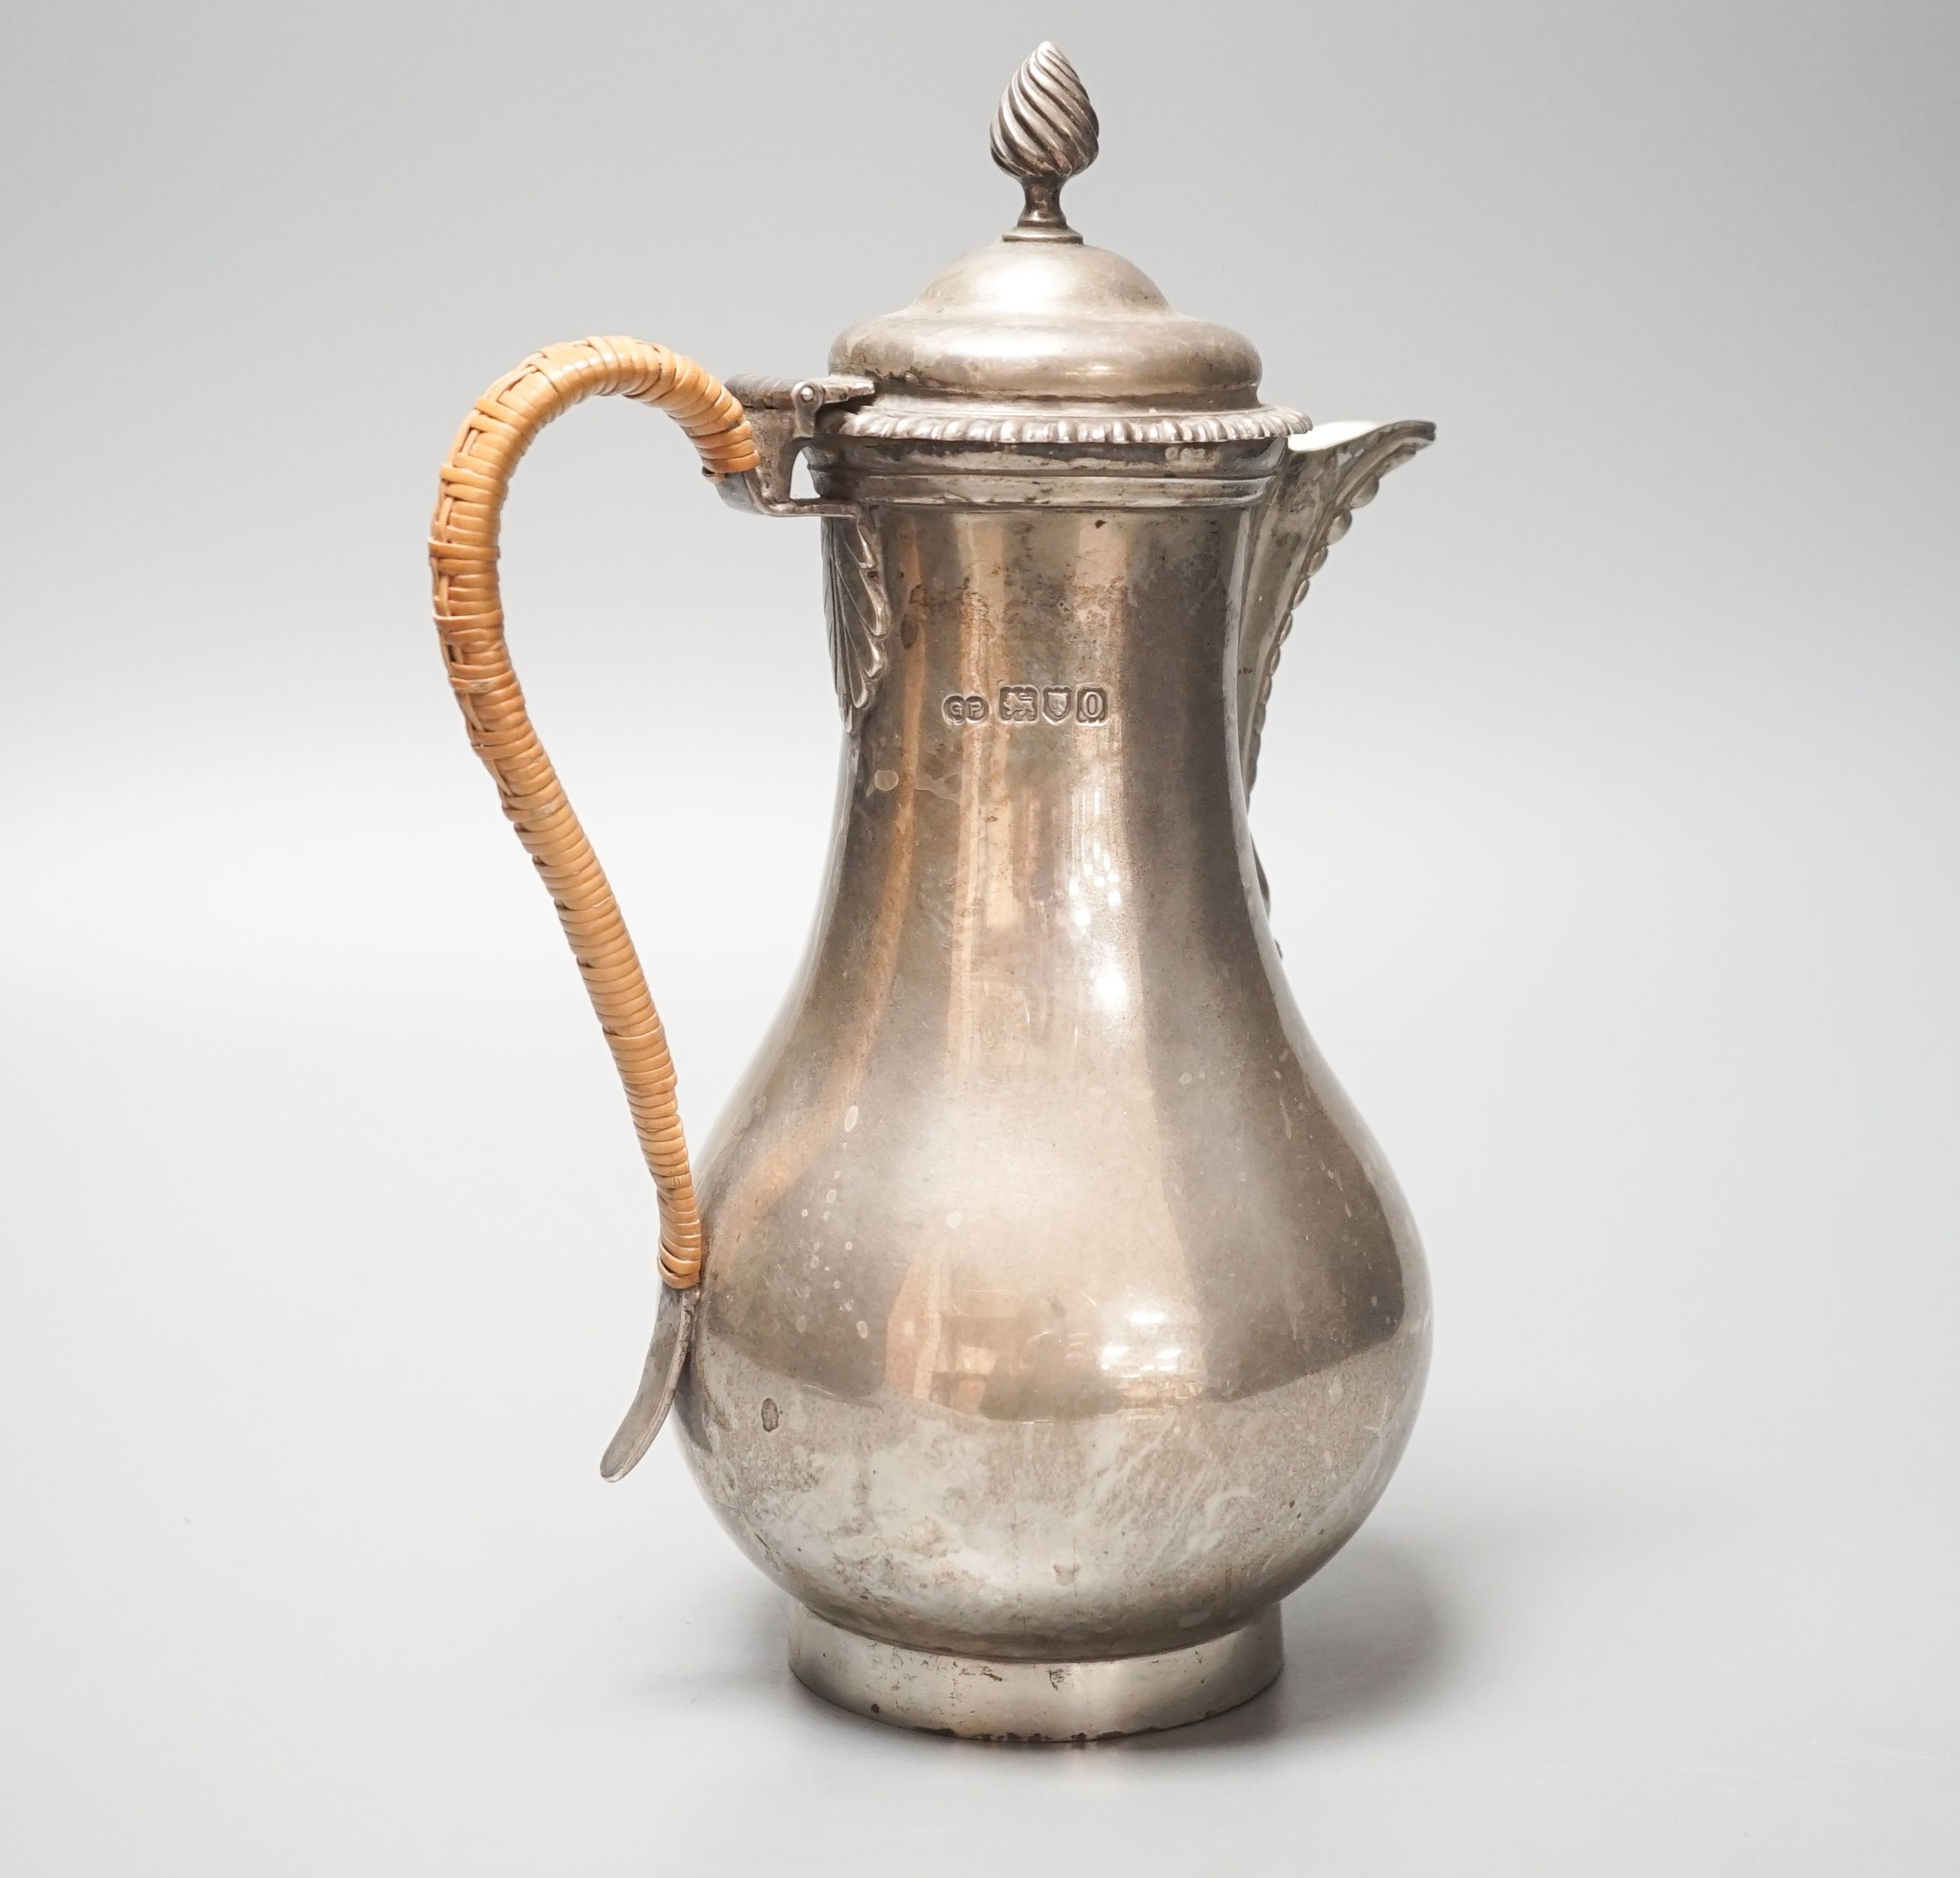 An Edwardian silver baluster hot water jug, George Perkins, London, 1909, height 22.9cm, gross 19.5oz.